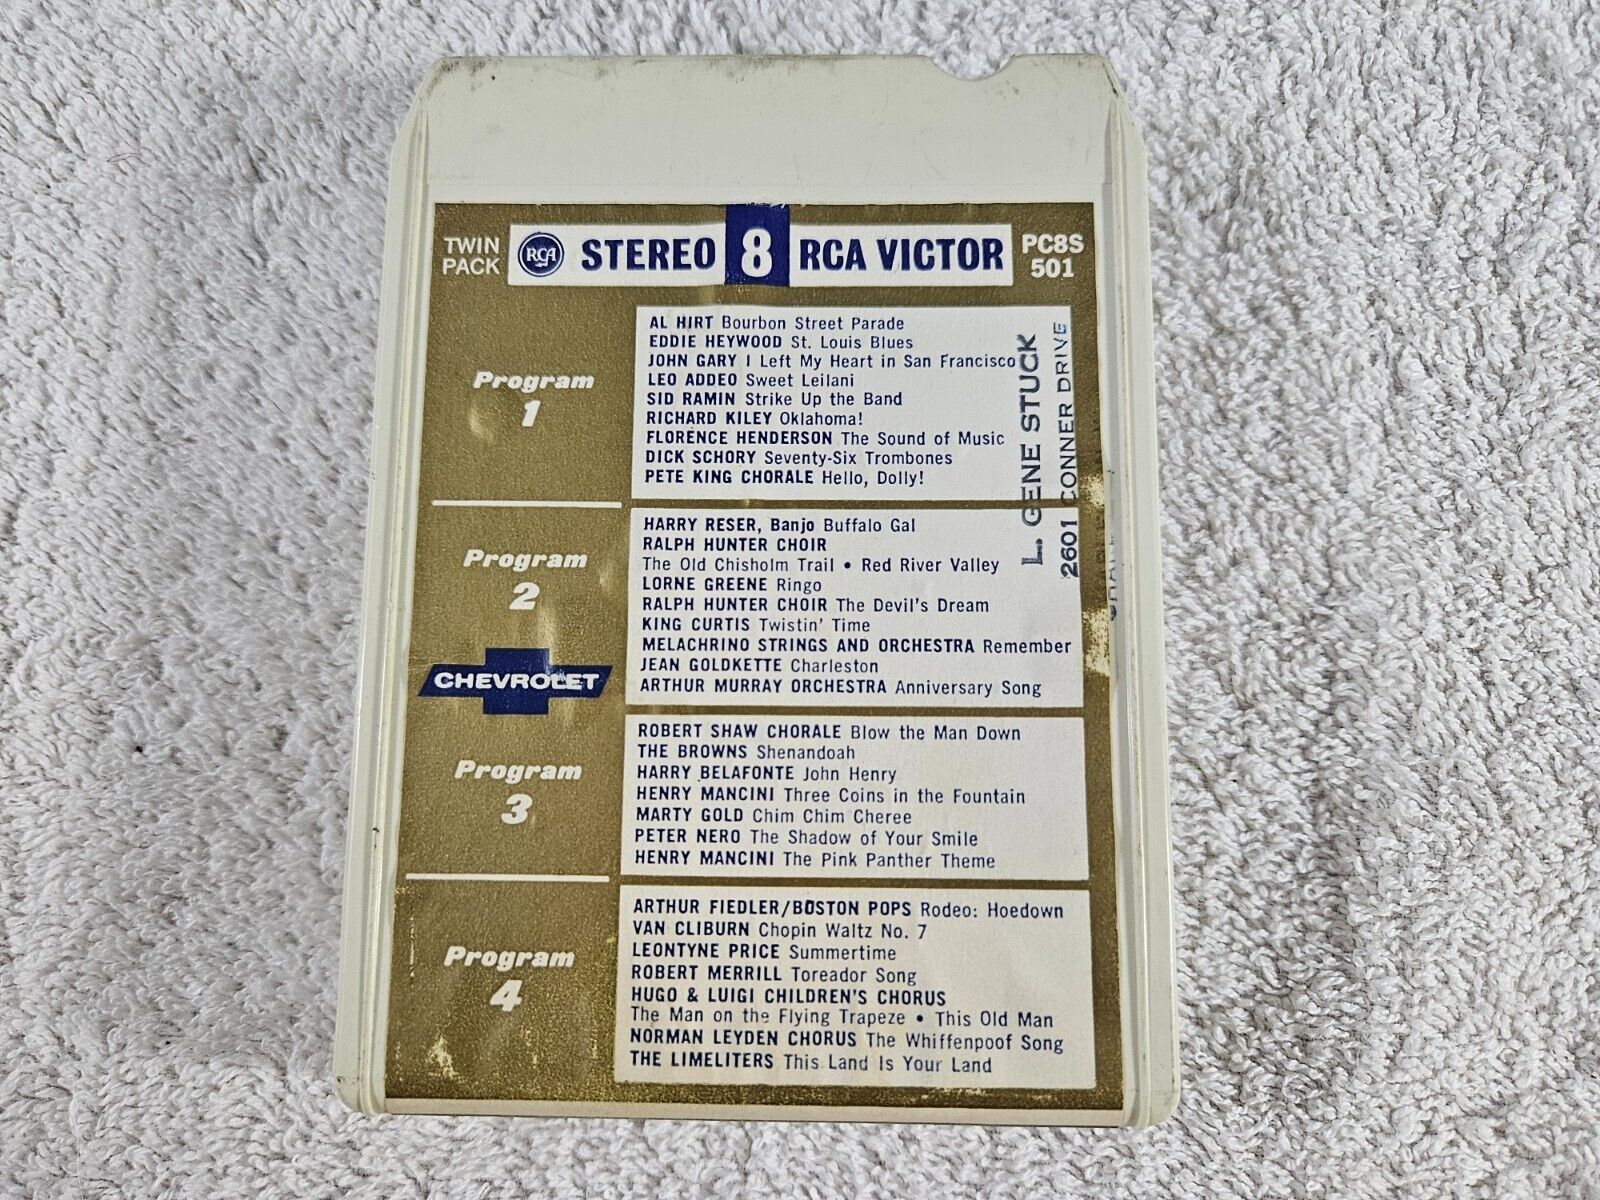 1967 Chevrolet 8-Track Tape. Professionally Rebuilt. PC8S-501